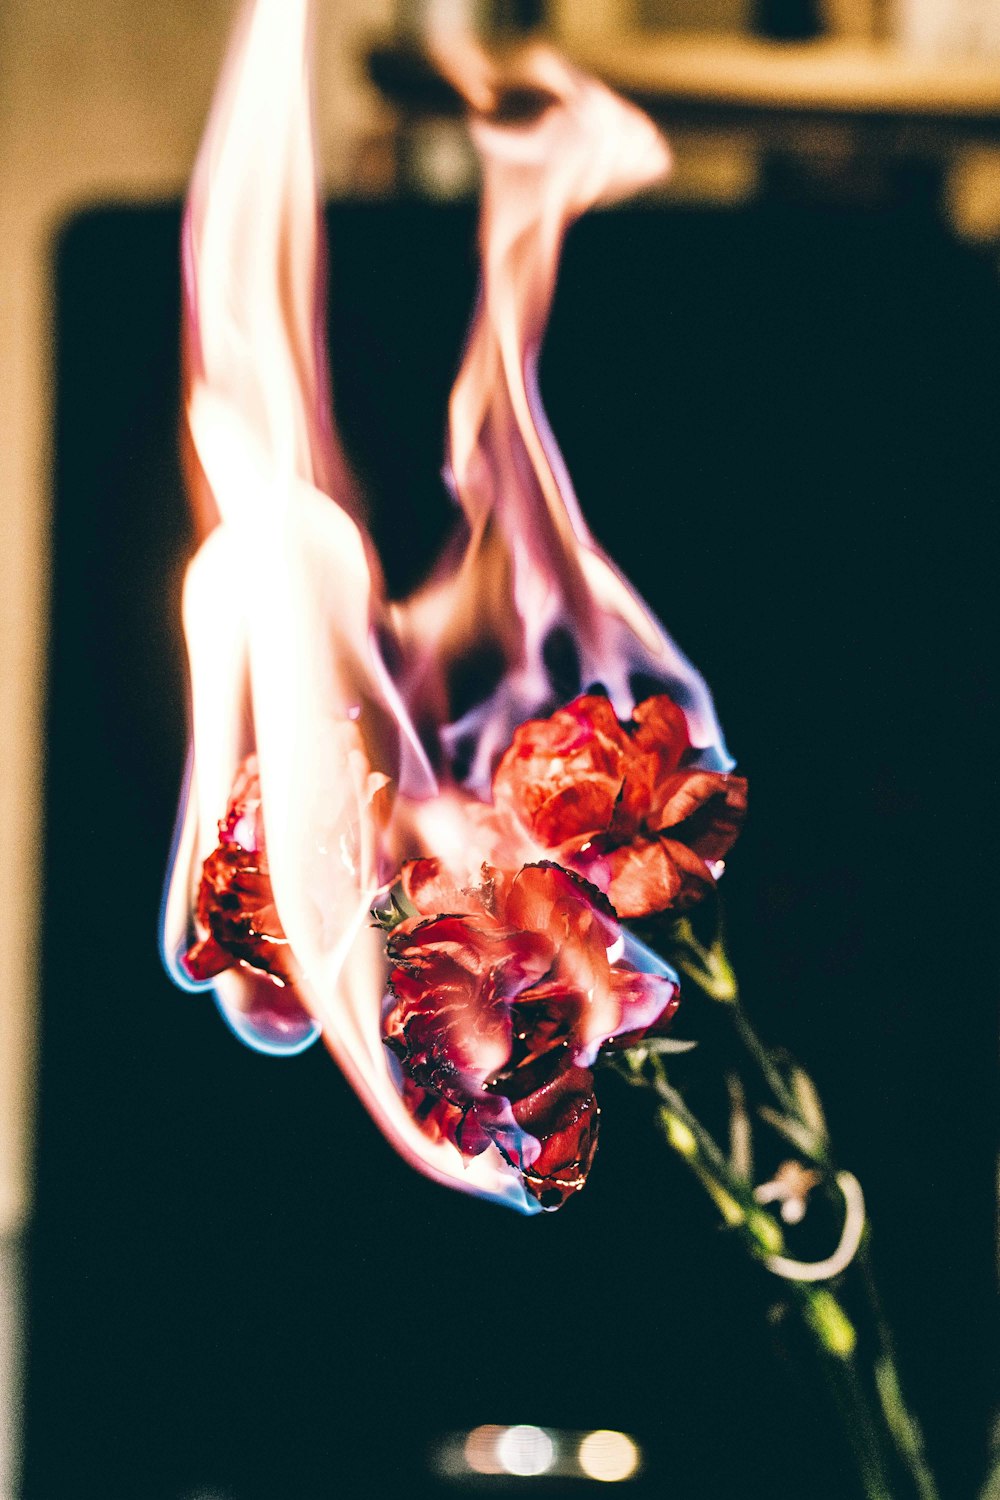 Burning Rose Pictures | Download Free Images on Unsplash